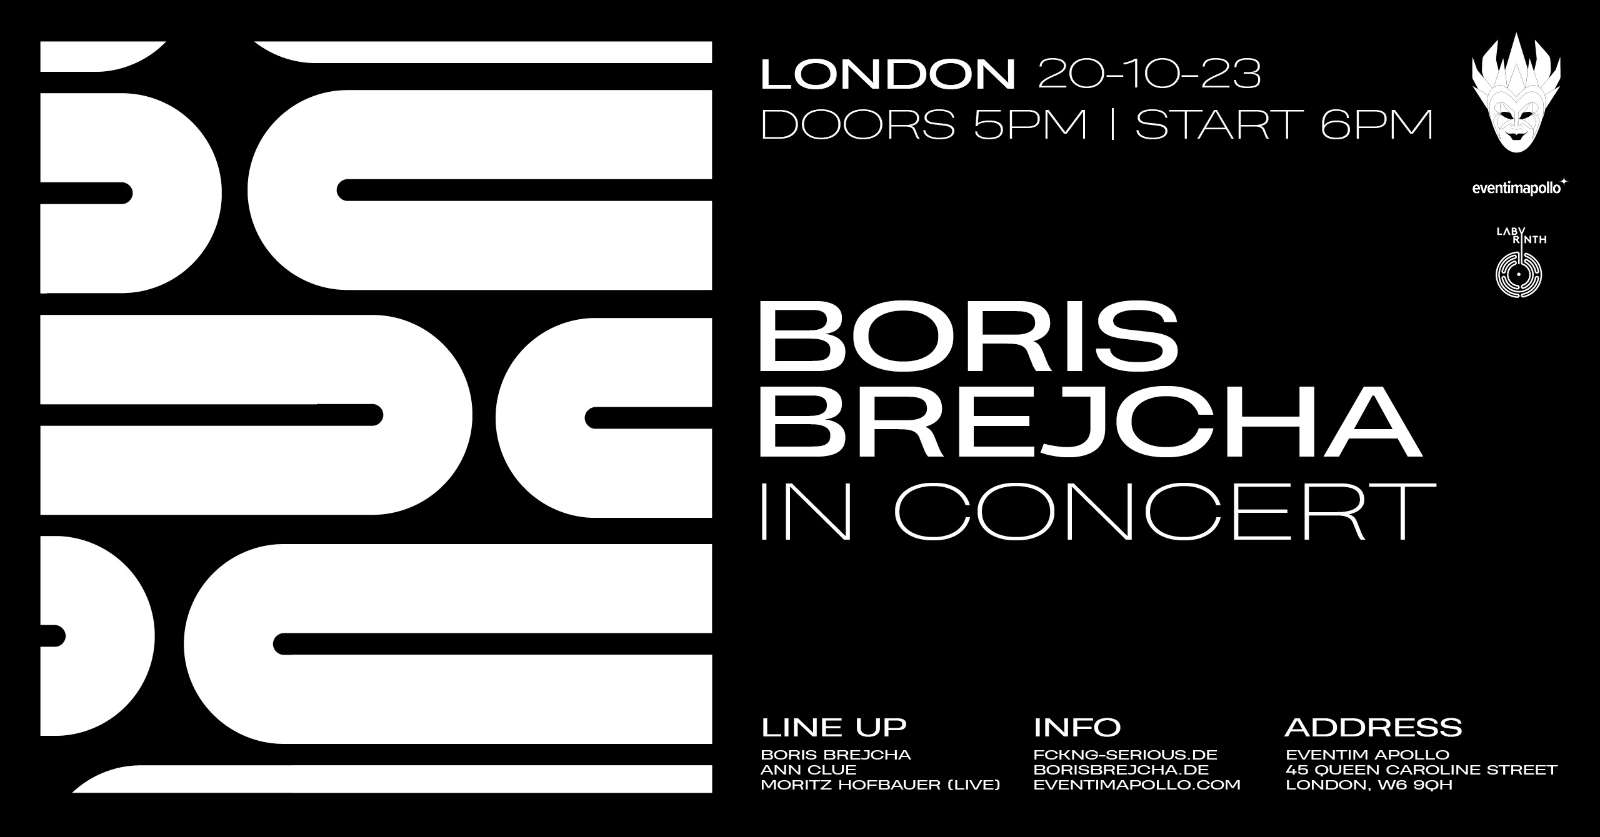 Boris Brejcha in Concert London